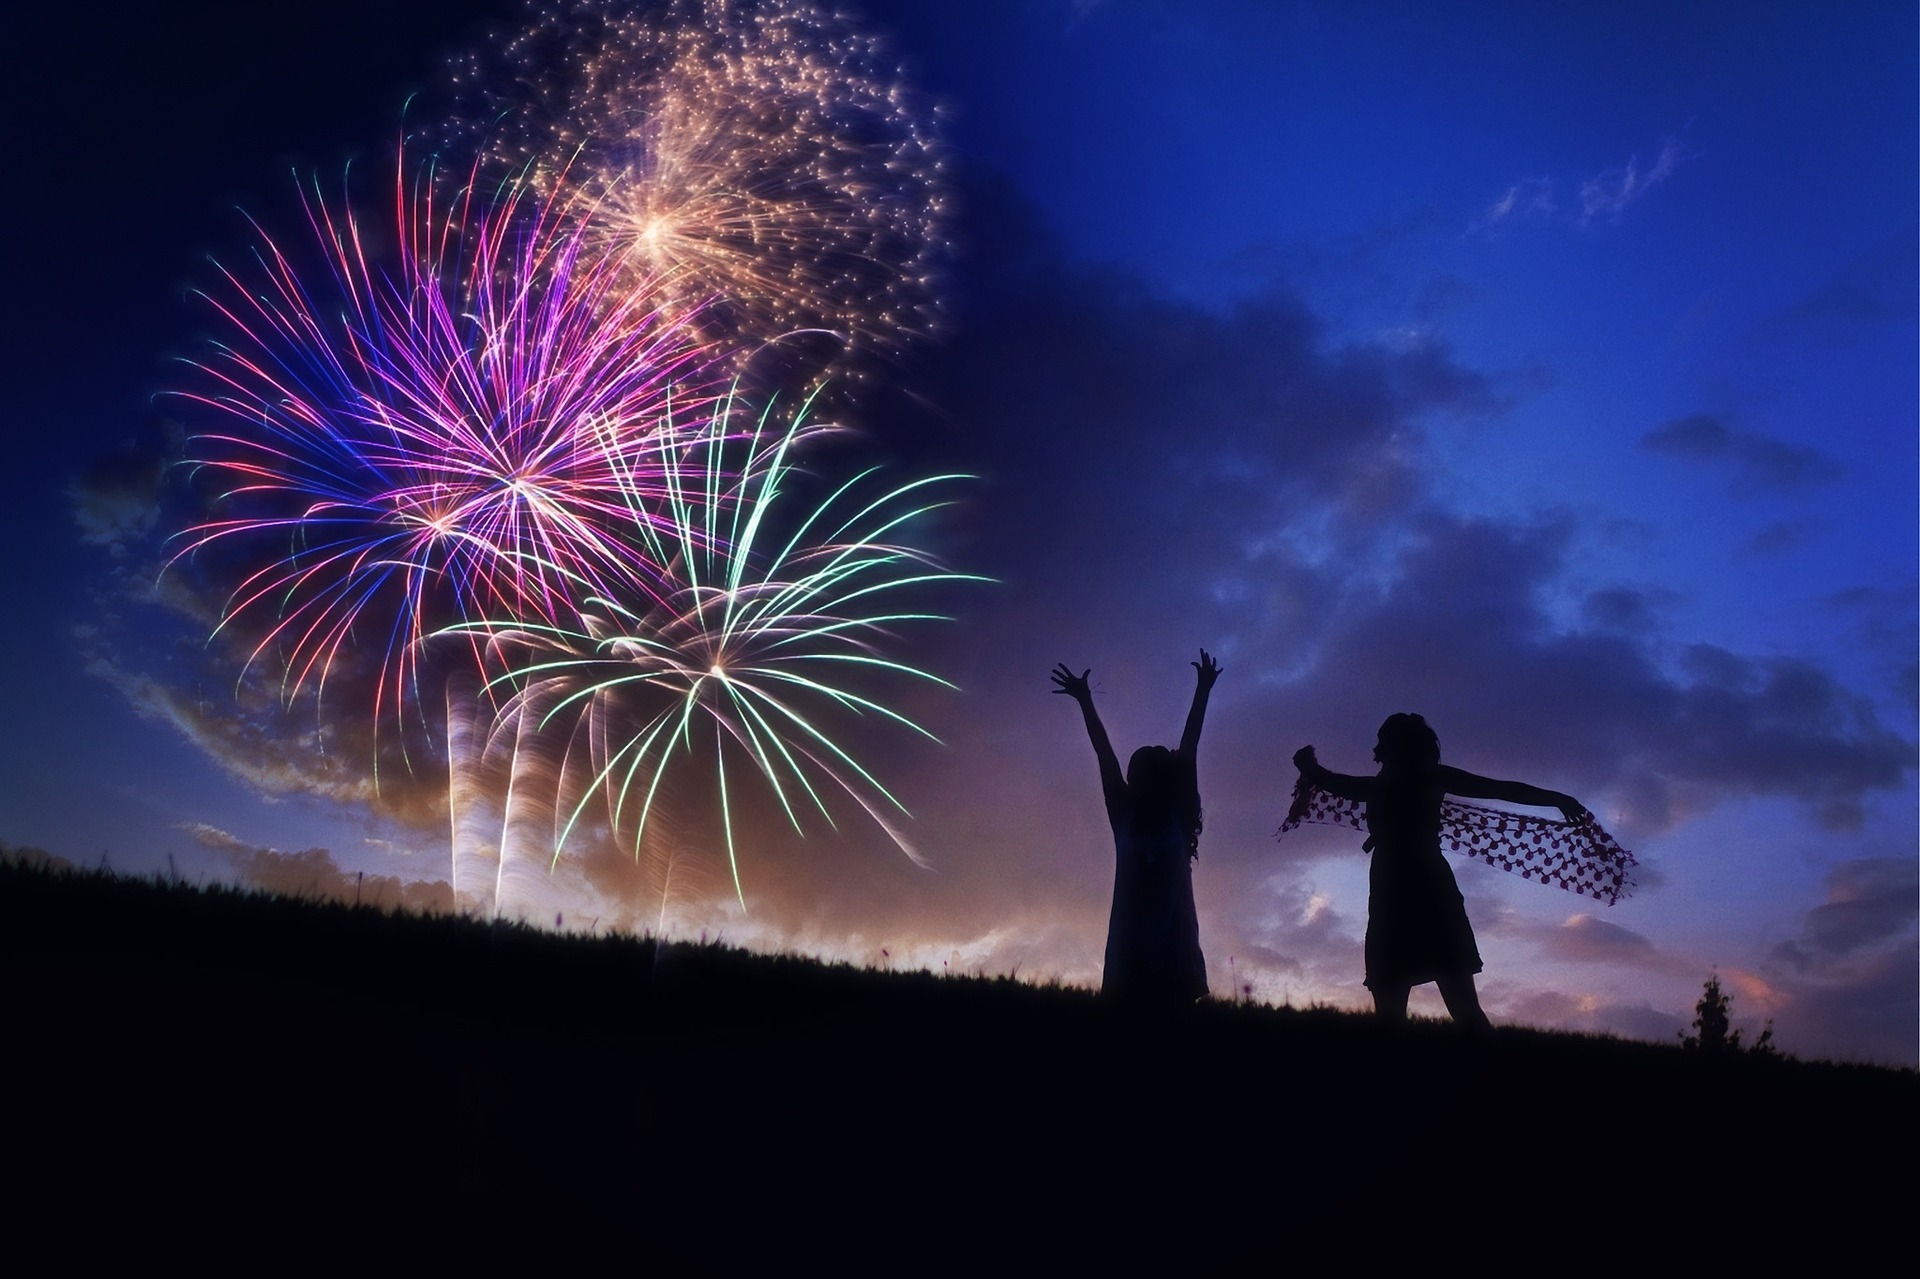 Why do celebrate fireworks night?